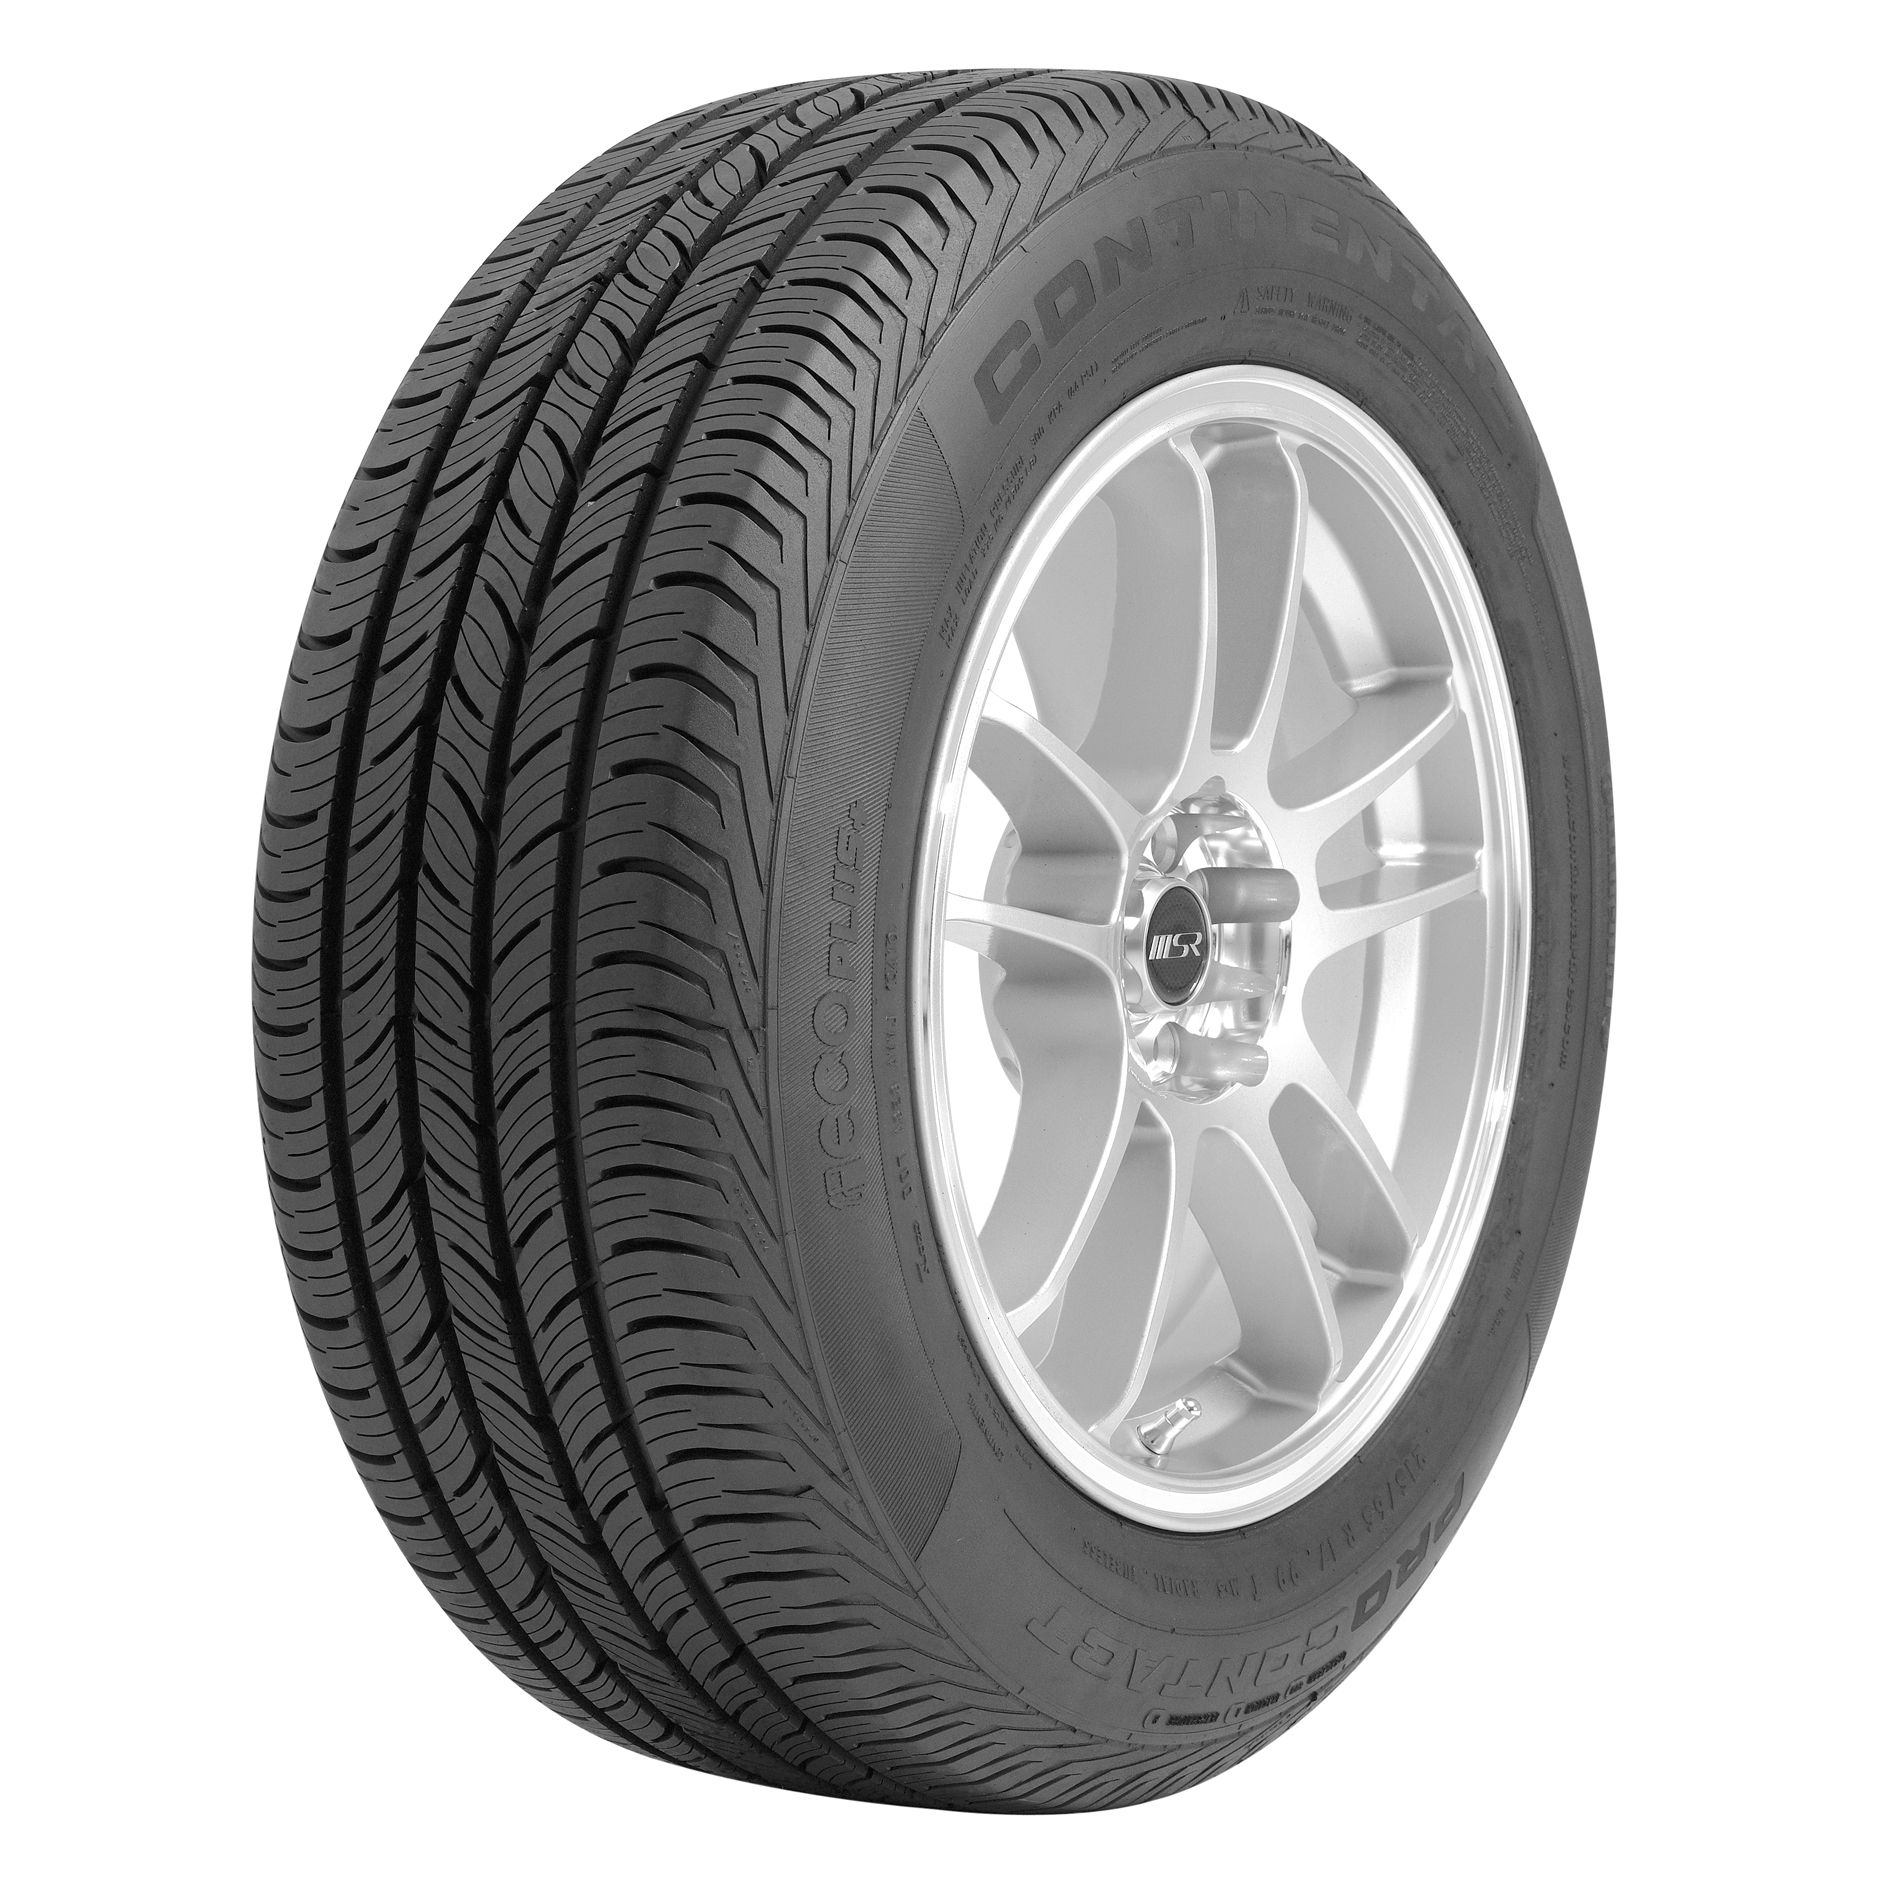 Continental Pro Contact Eco Plus - 195/65R15 91T BW - All-Season Tire